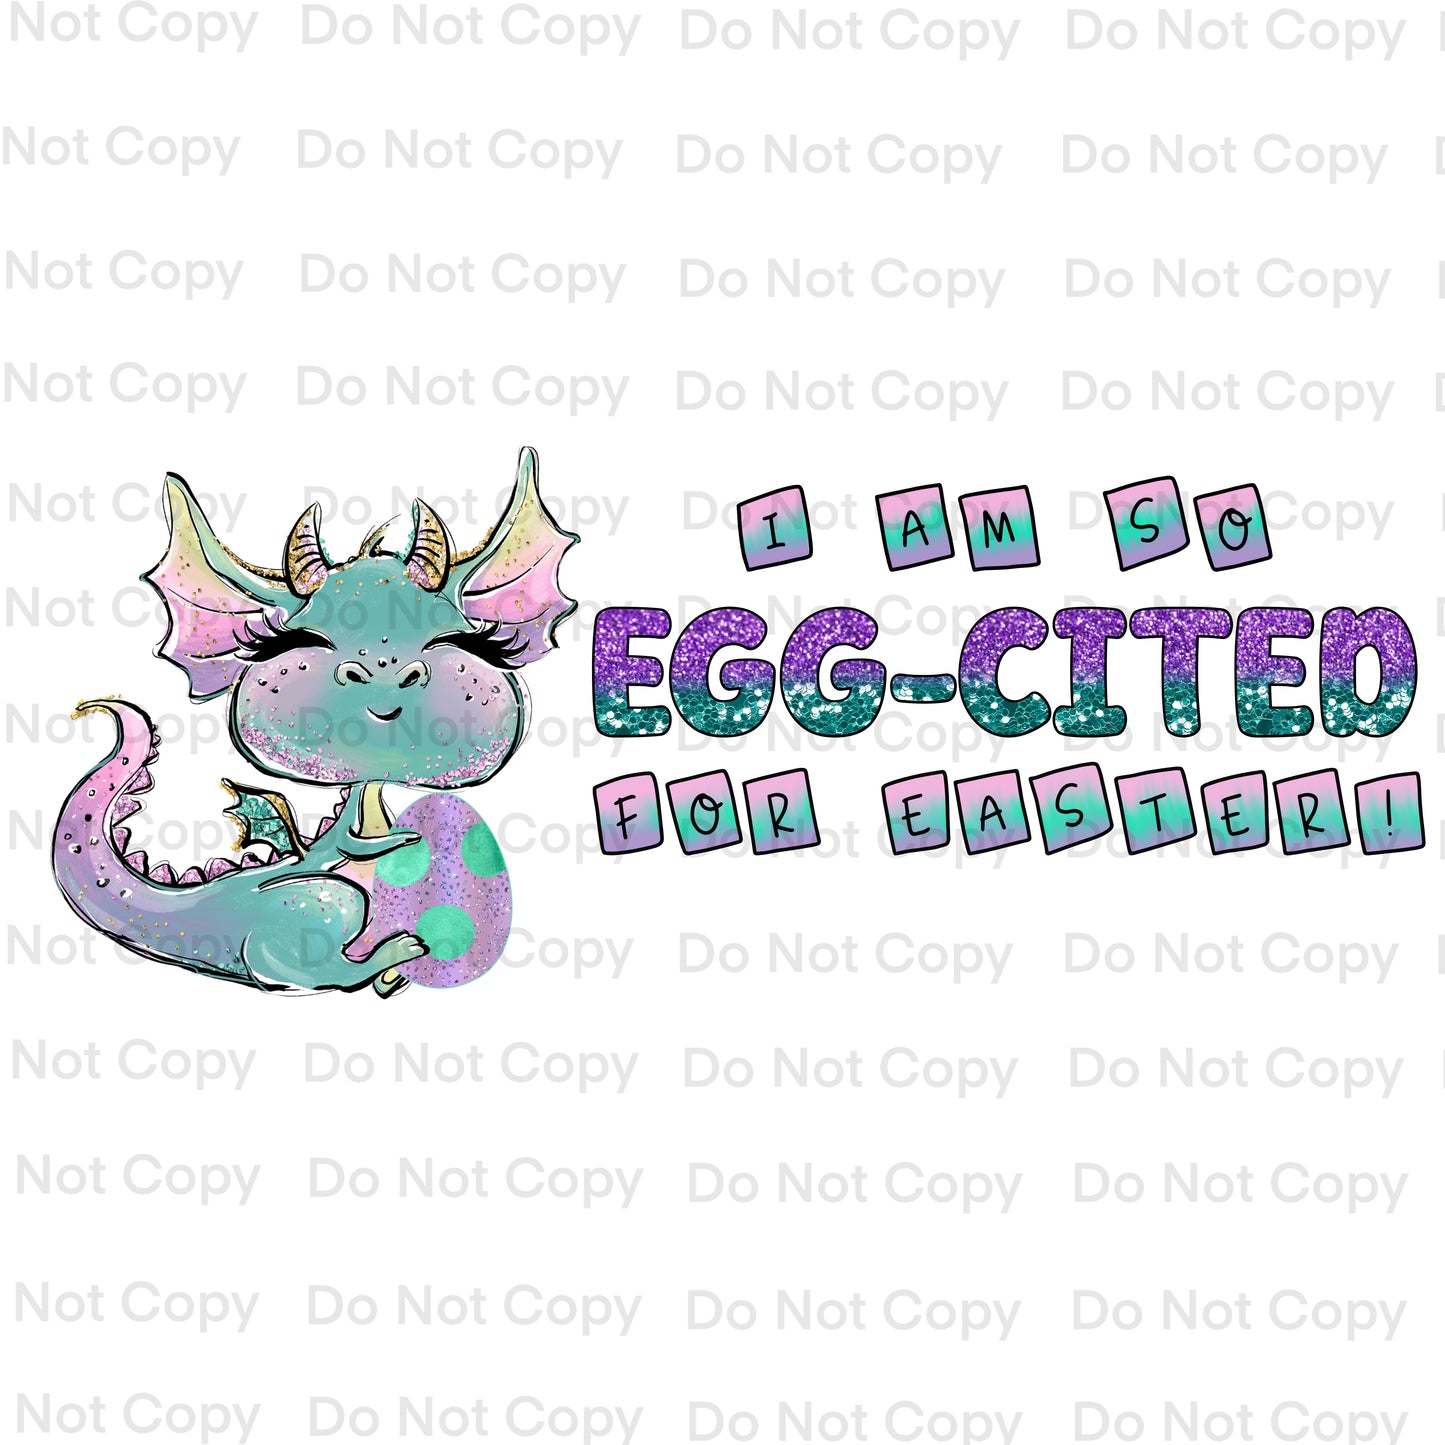 Eggcited Dragon